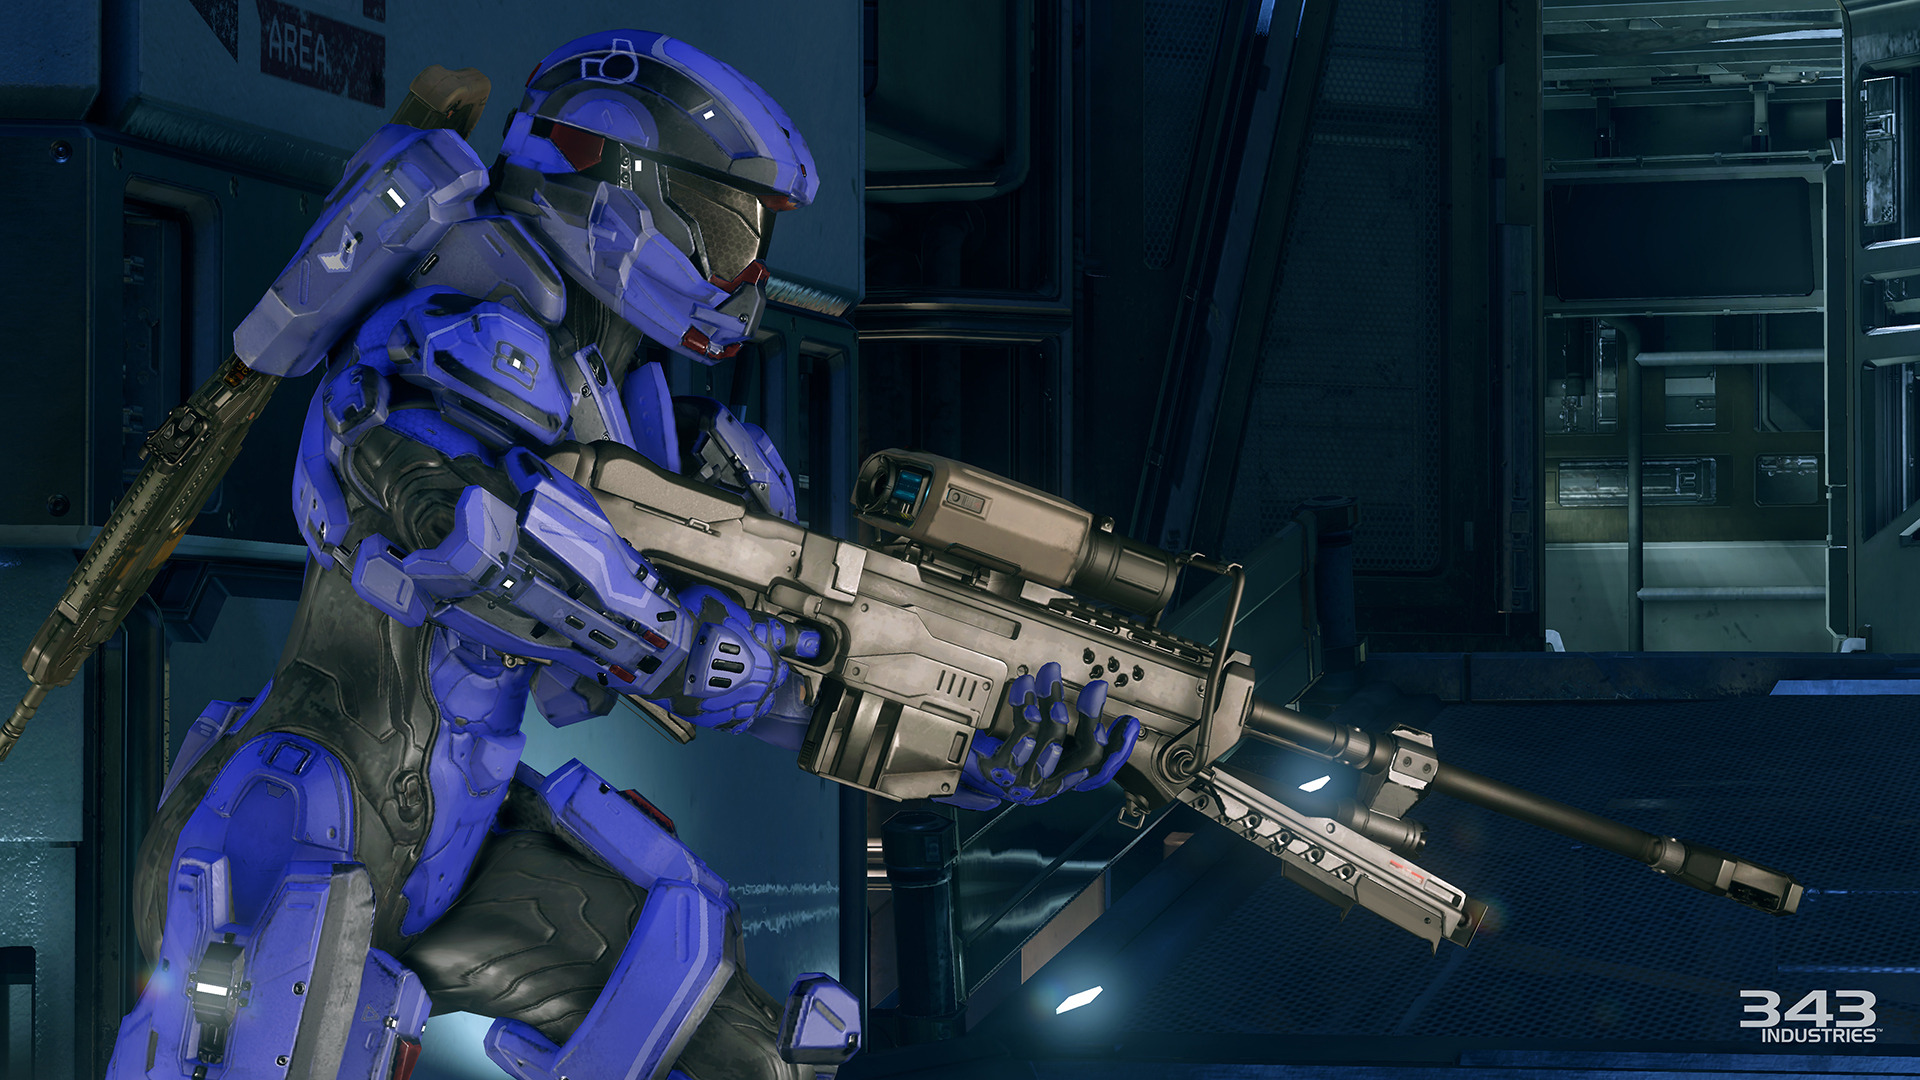 Halofest開幕 Halo 5 Guardians マルチプレイ映像お披露目 スパルタンの新機能も 30枚目の写真 画像 Game Spark 国内 海外ゲーム情報サイト